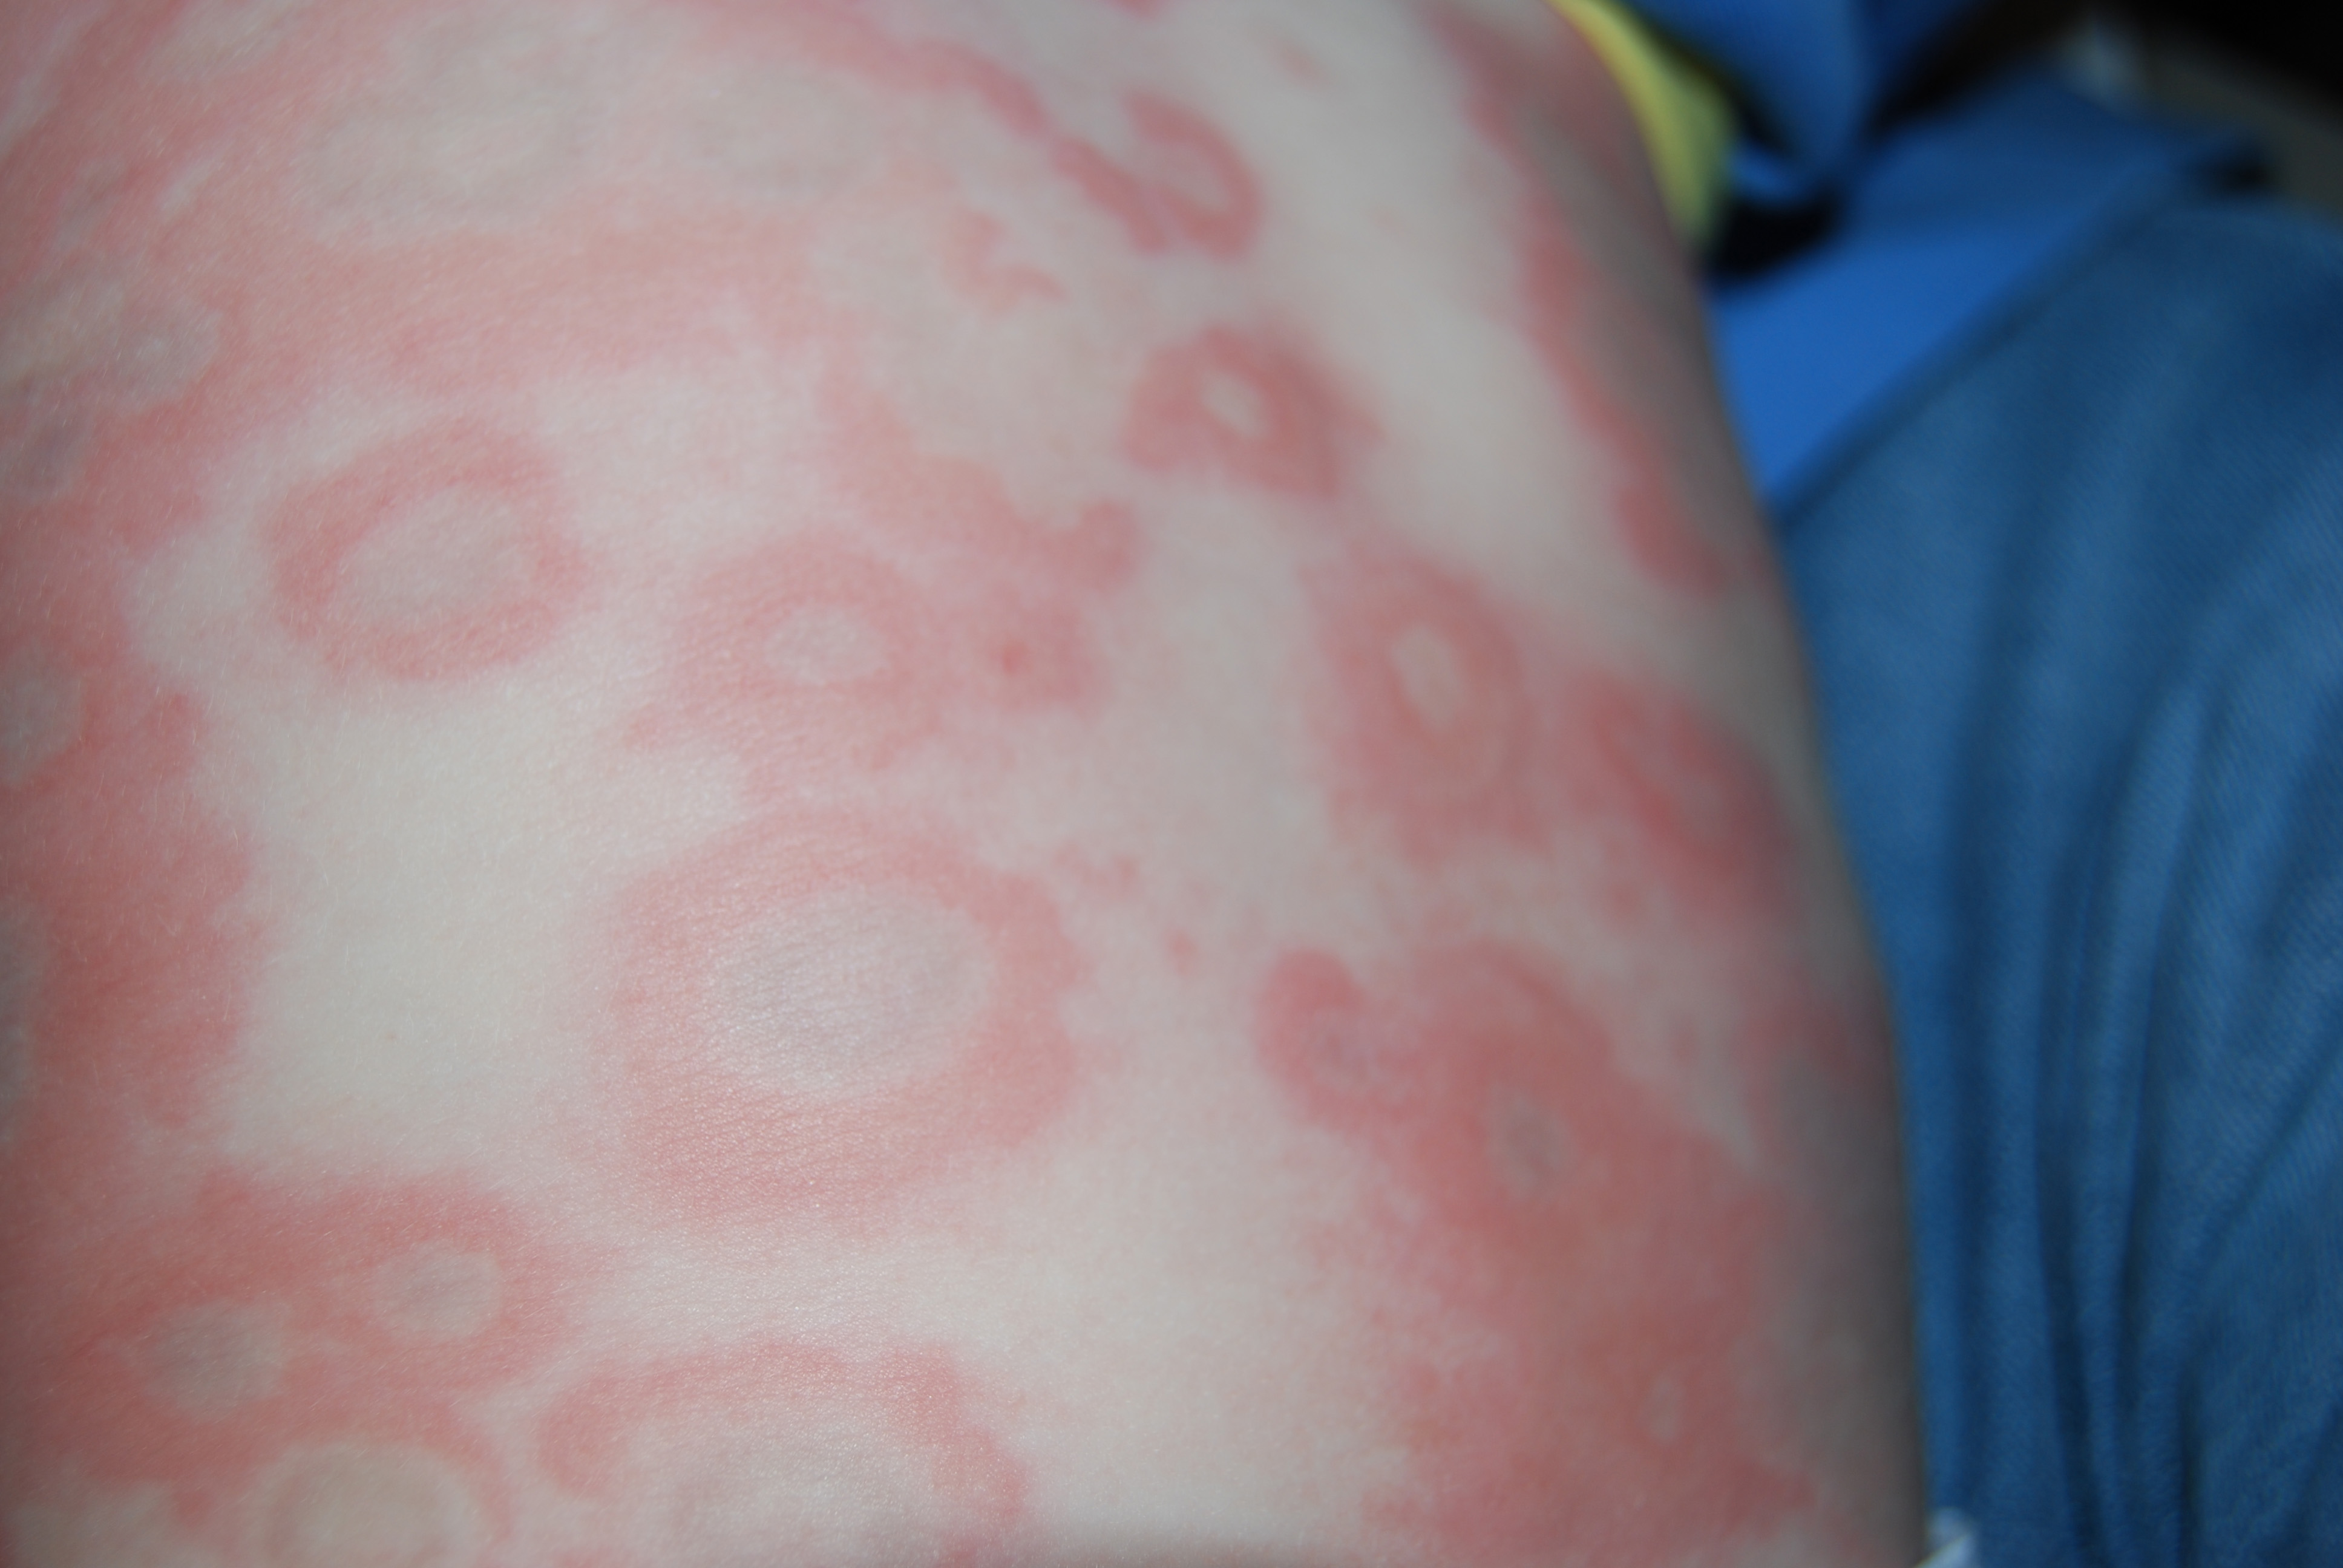 Itchy rash on palms of hands - Dermatology - MedHelp